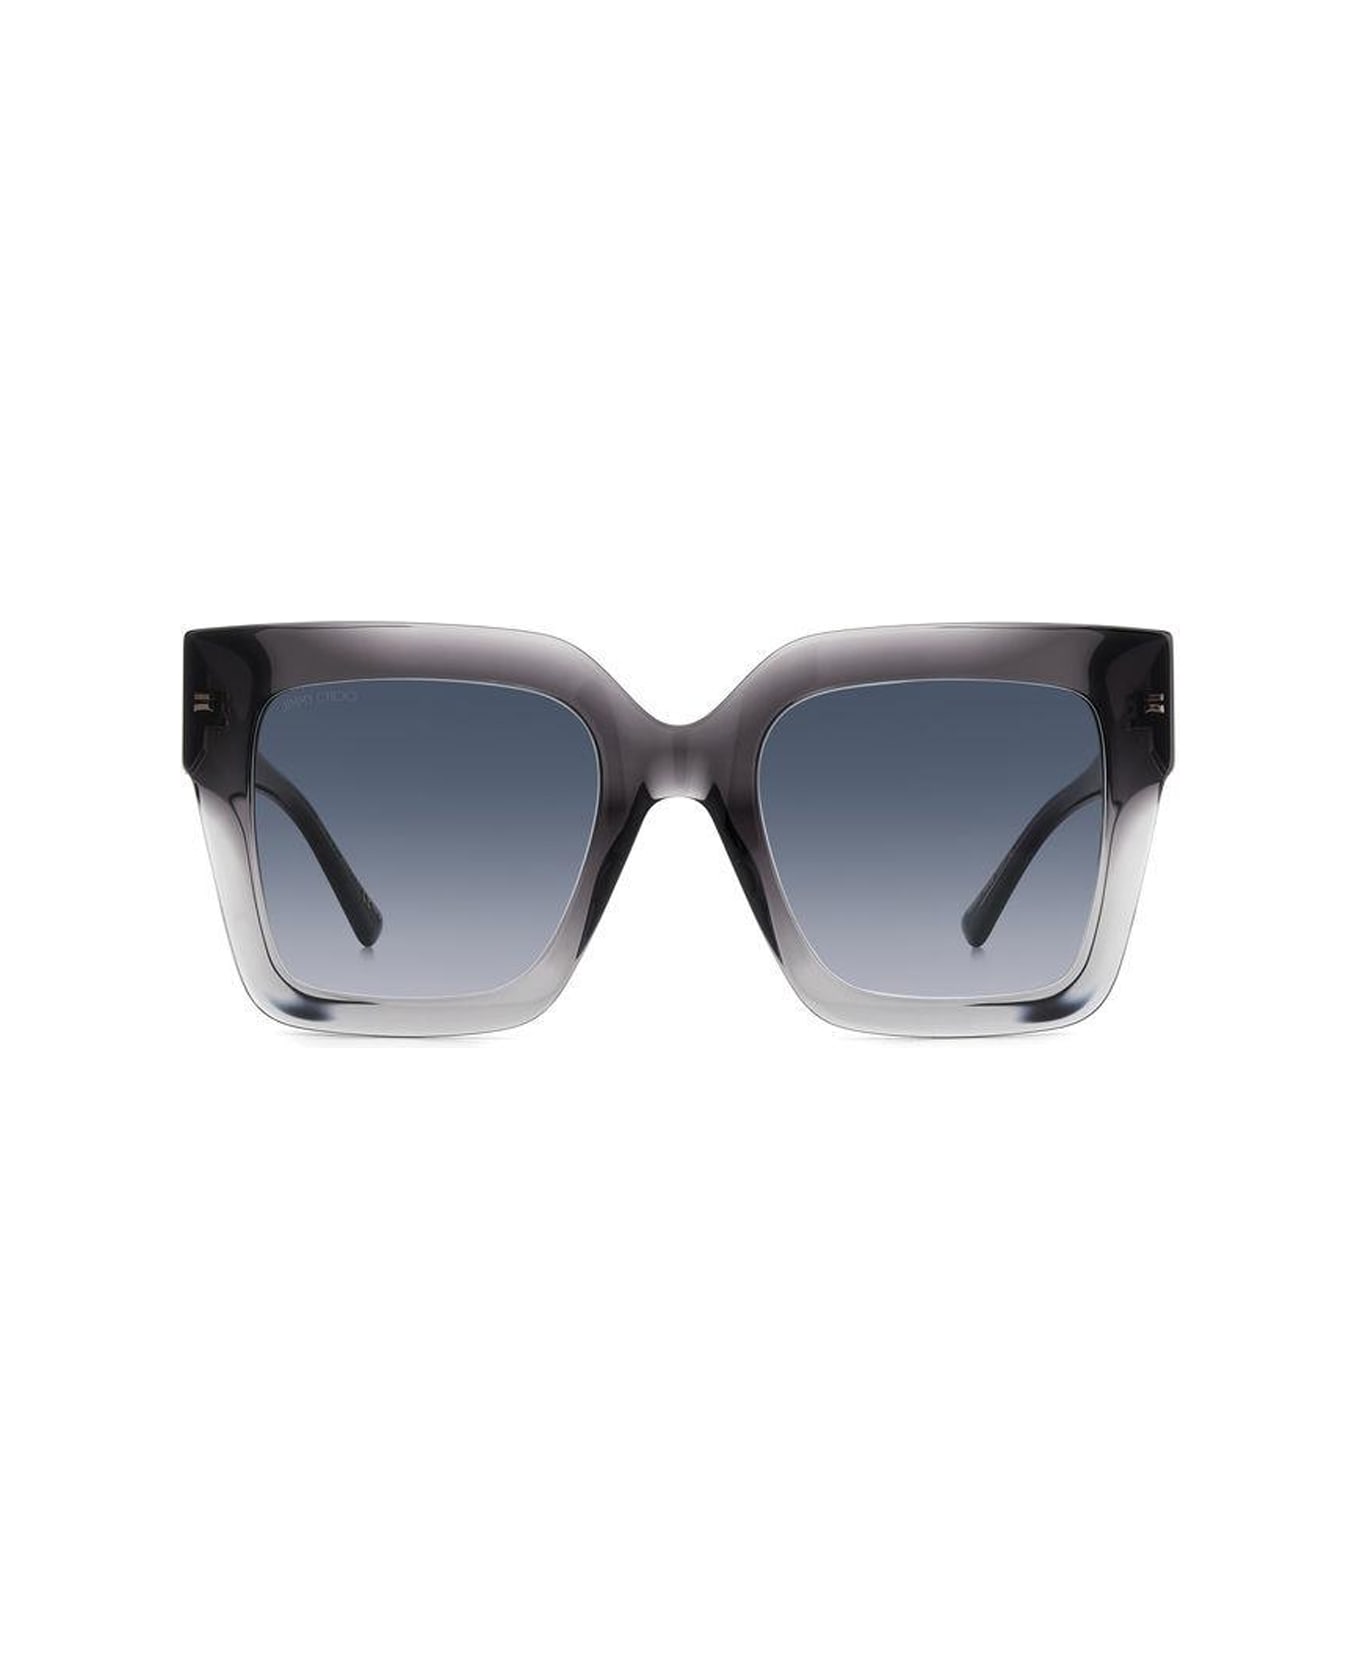 Jimmy Choo Eyewear Jc Edna/s Kb7/gb Sunglasses - Grigio サングラス